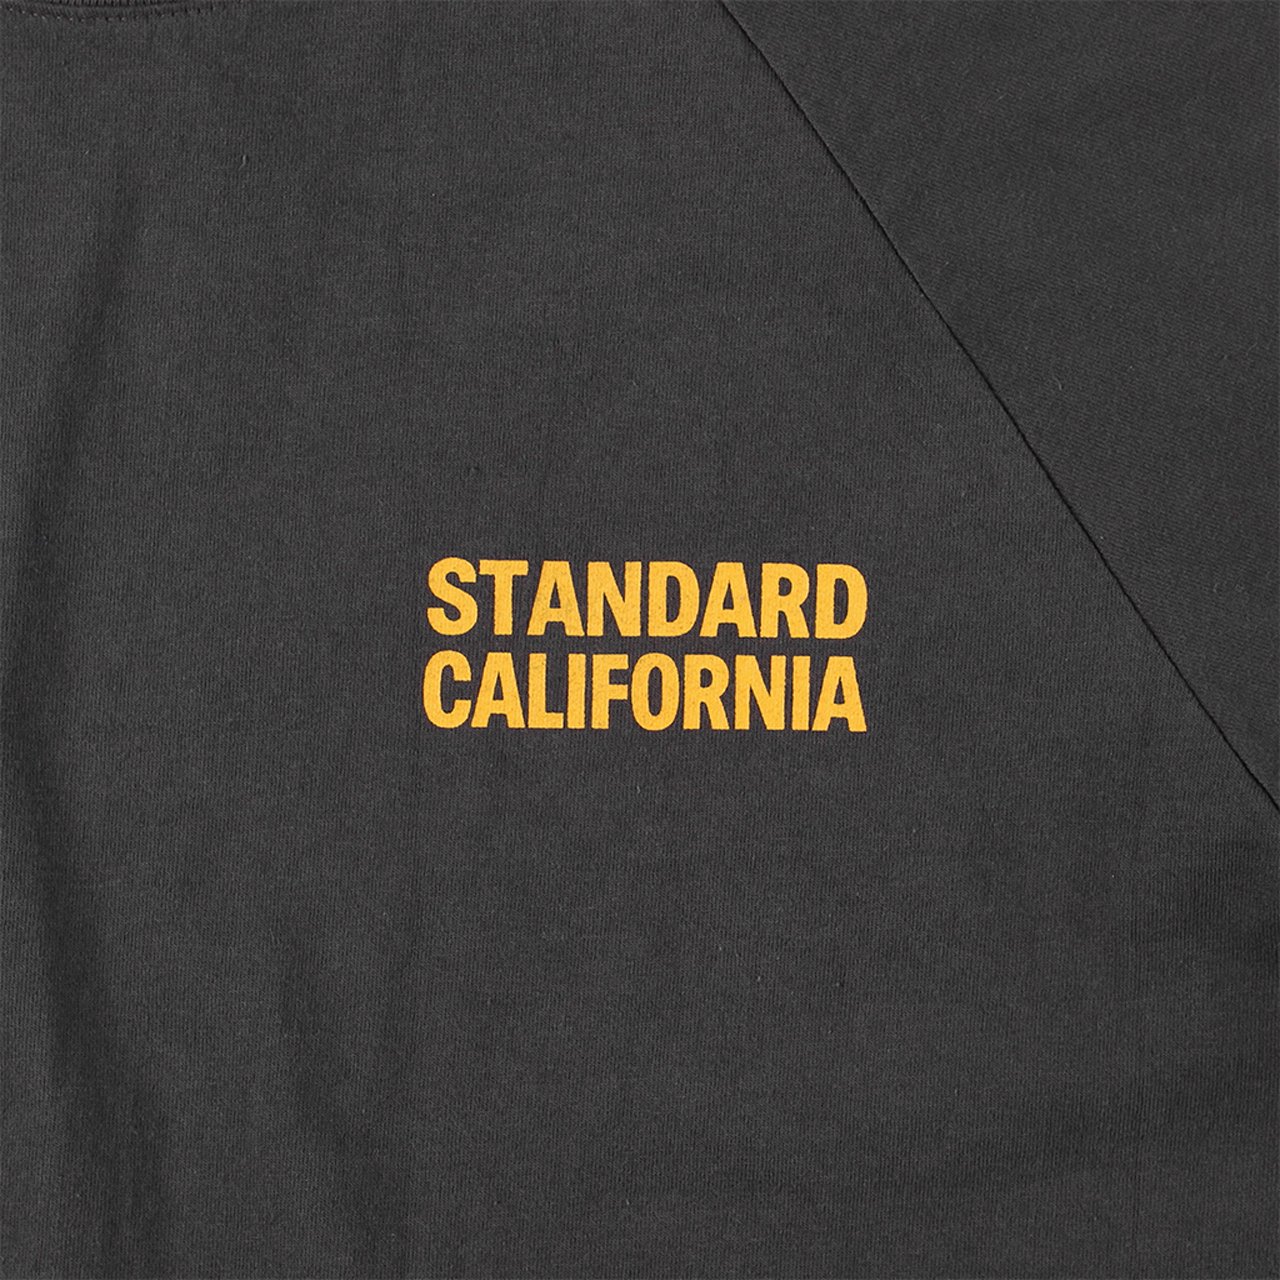 STANDARD CALIFORNIA(スタンダードカリフォルニア)24SS/春夏
US Cotton Logo Baseball Tee
TSBLC090
長袖Tシャツ
スタカリ
